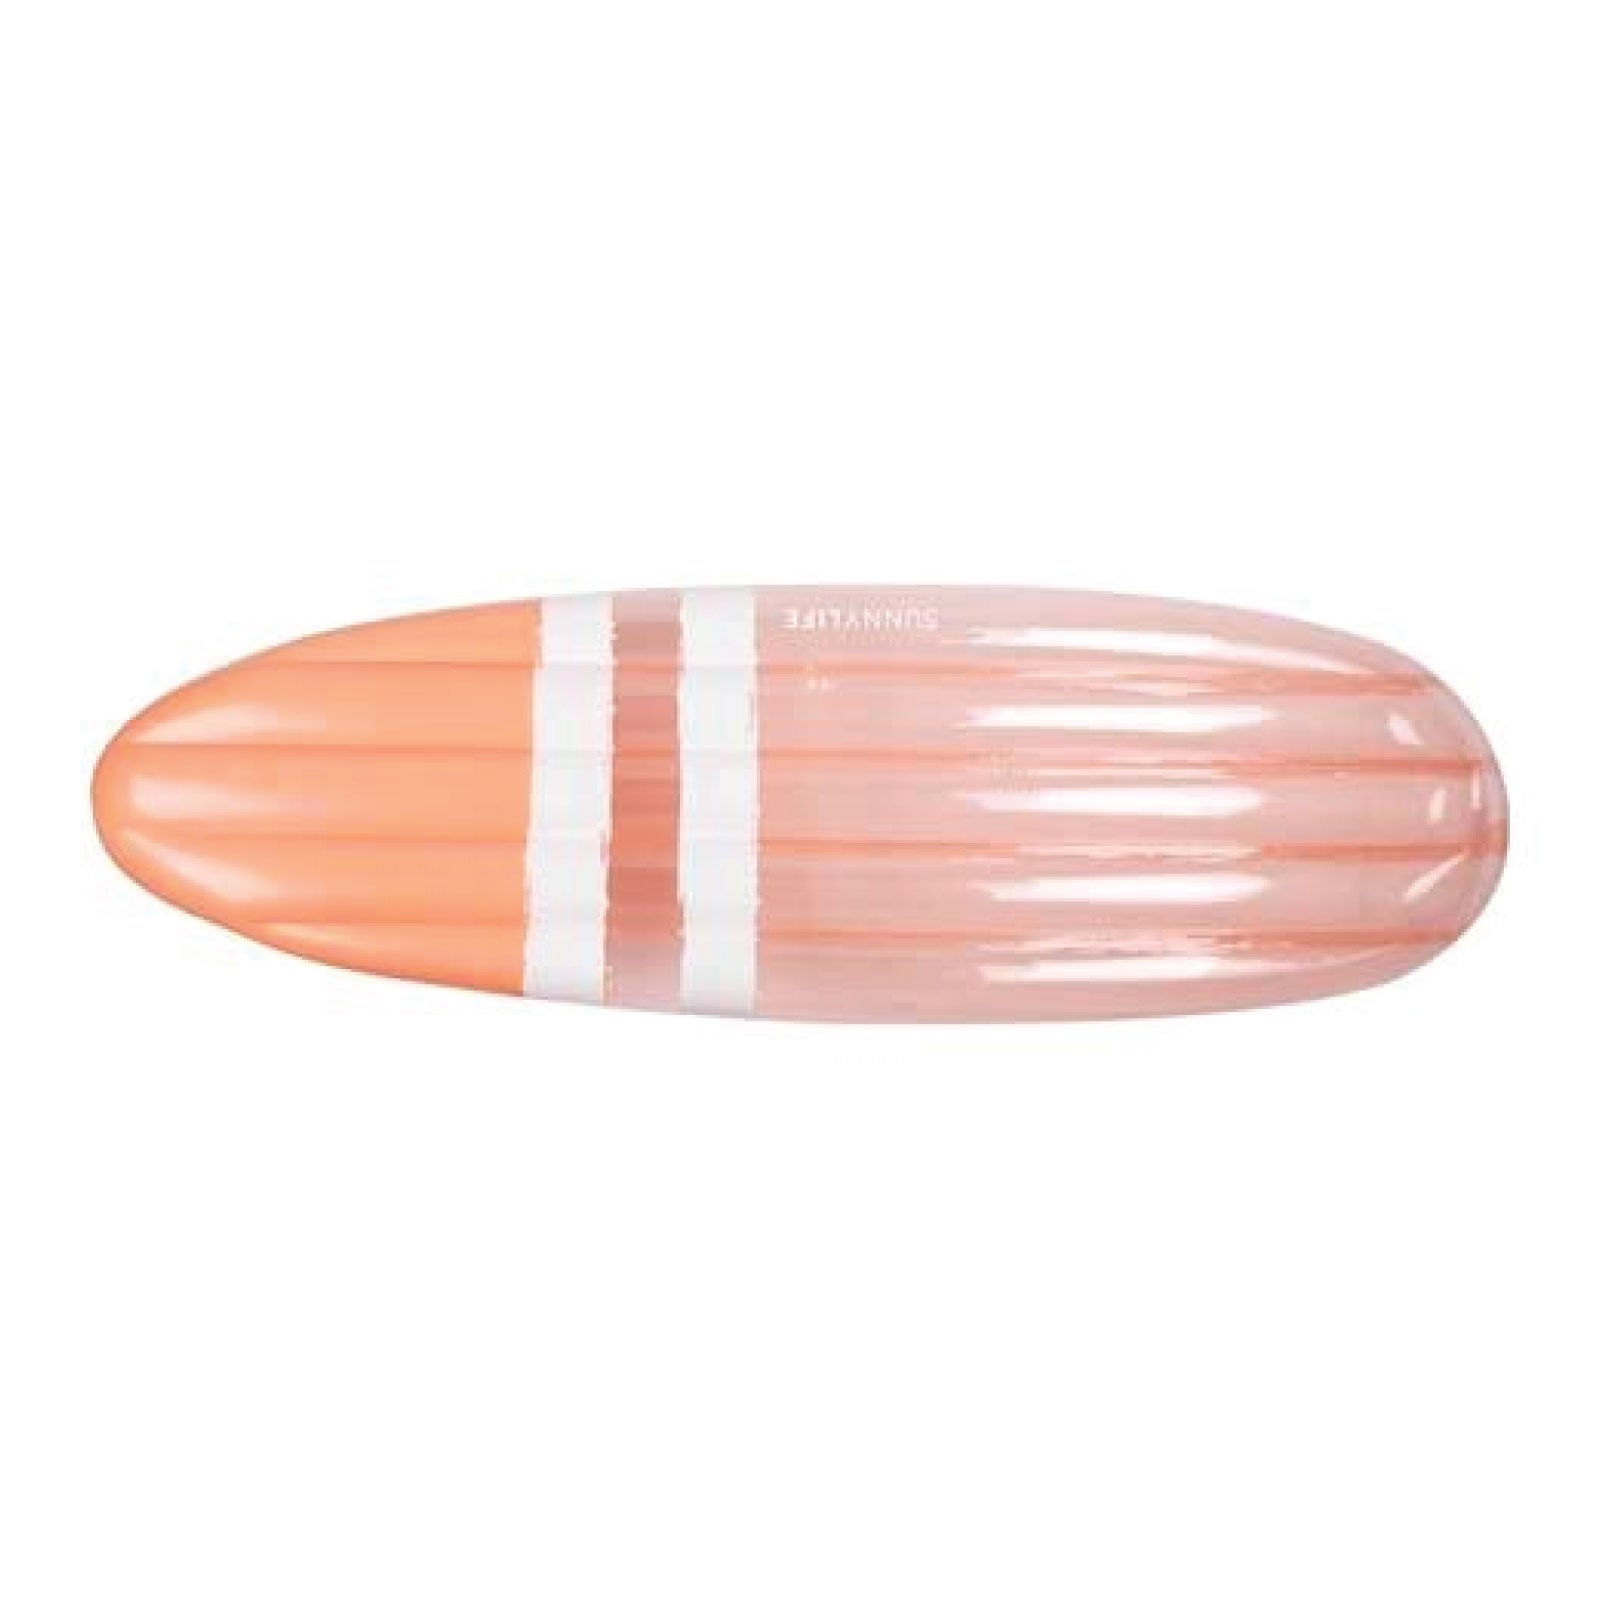 Surfboard Float in Peachy Pink